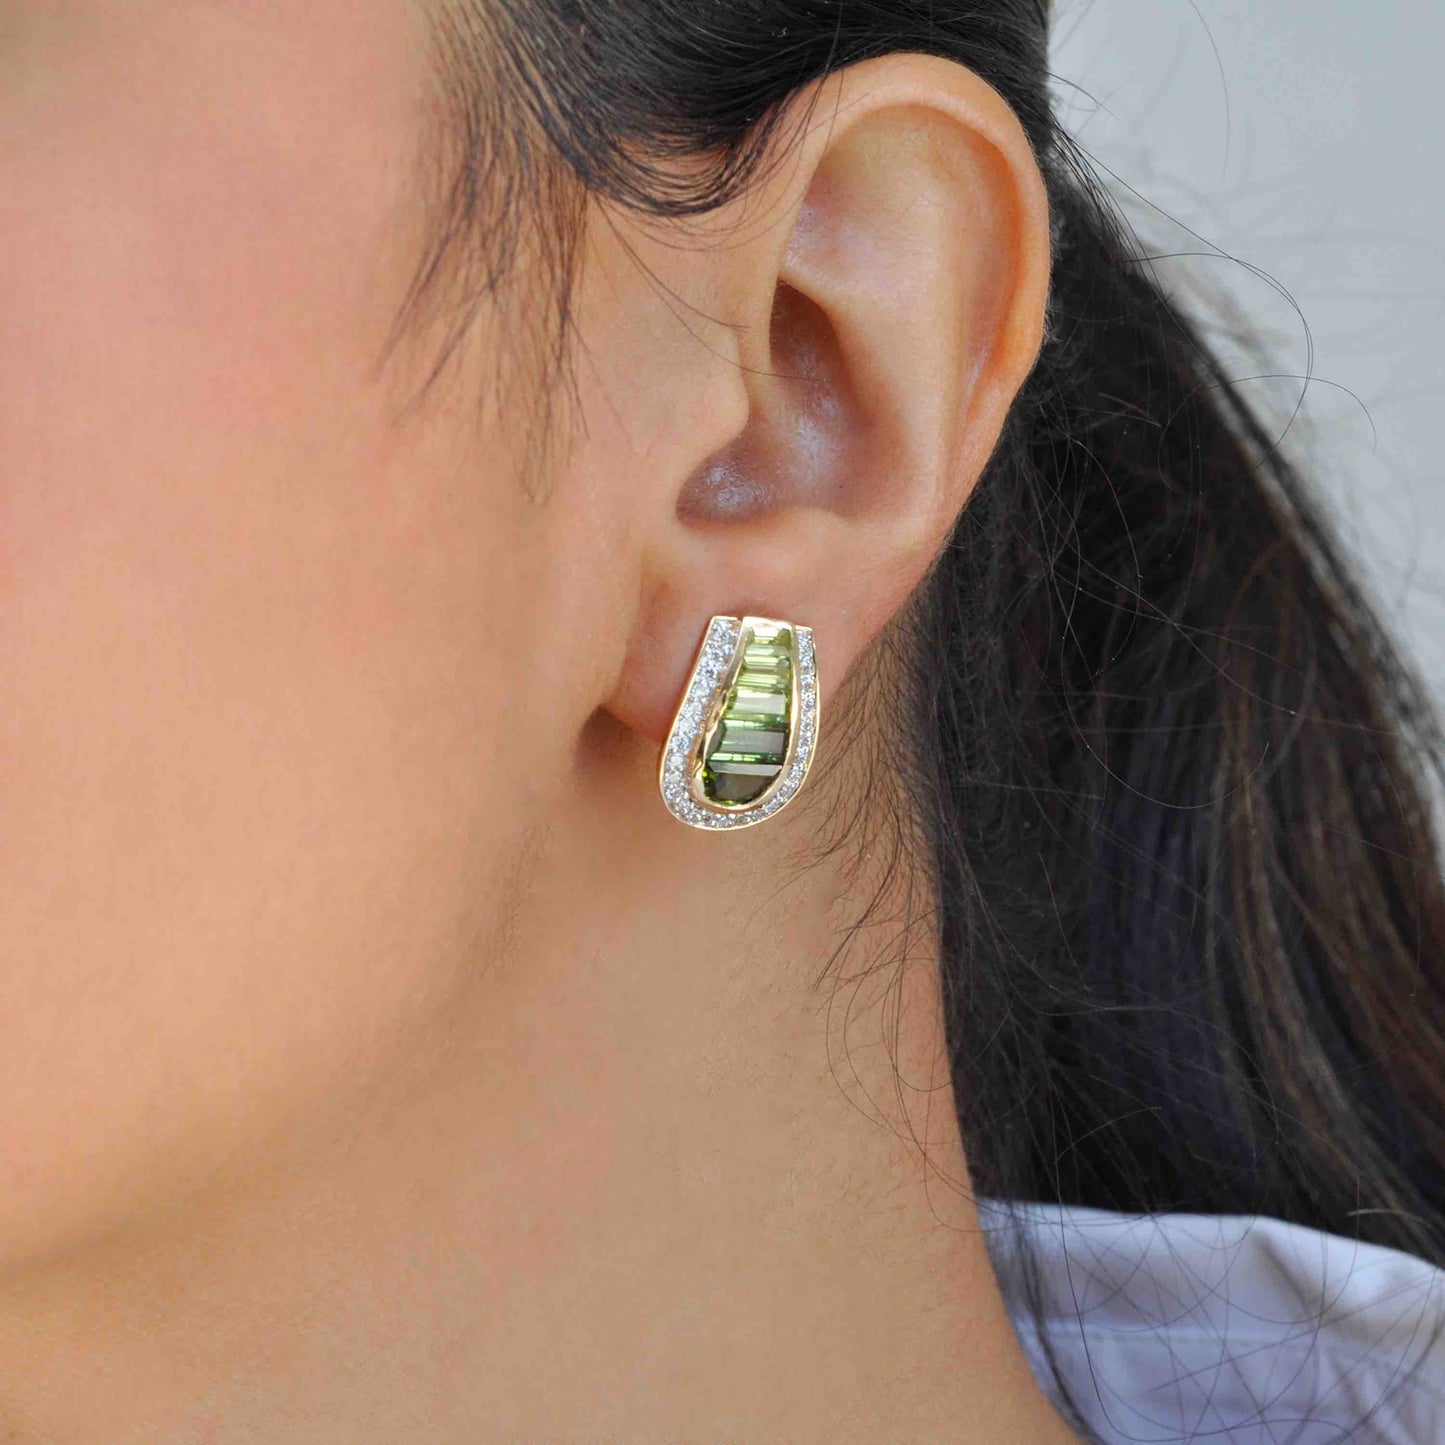 Handmade gemstone earrings with green tourmaline, peridot, and diamond studs